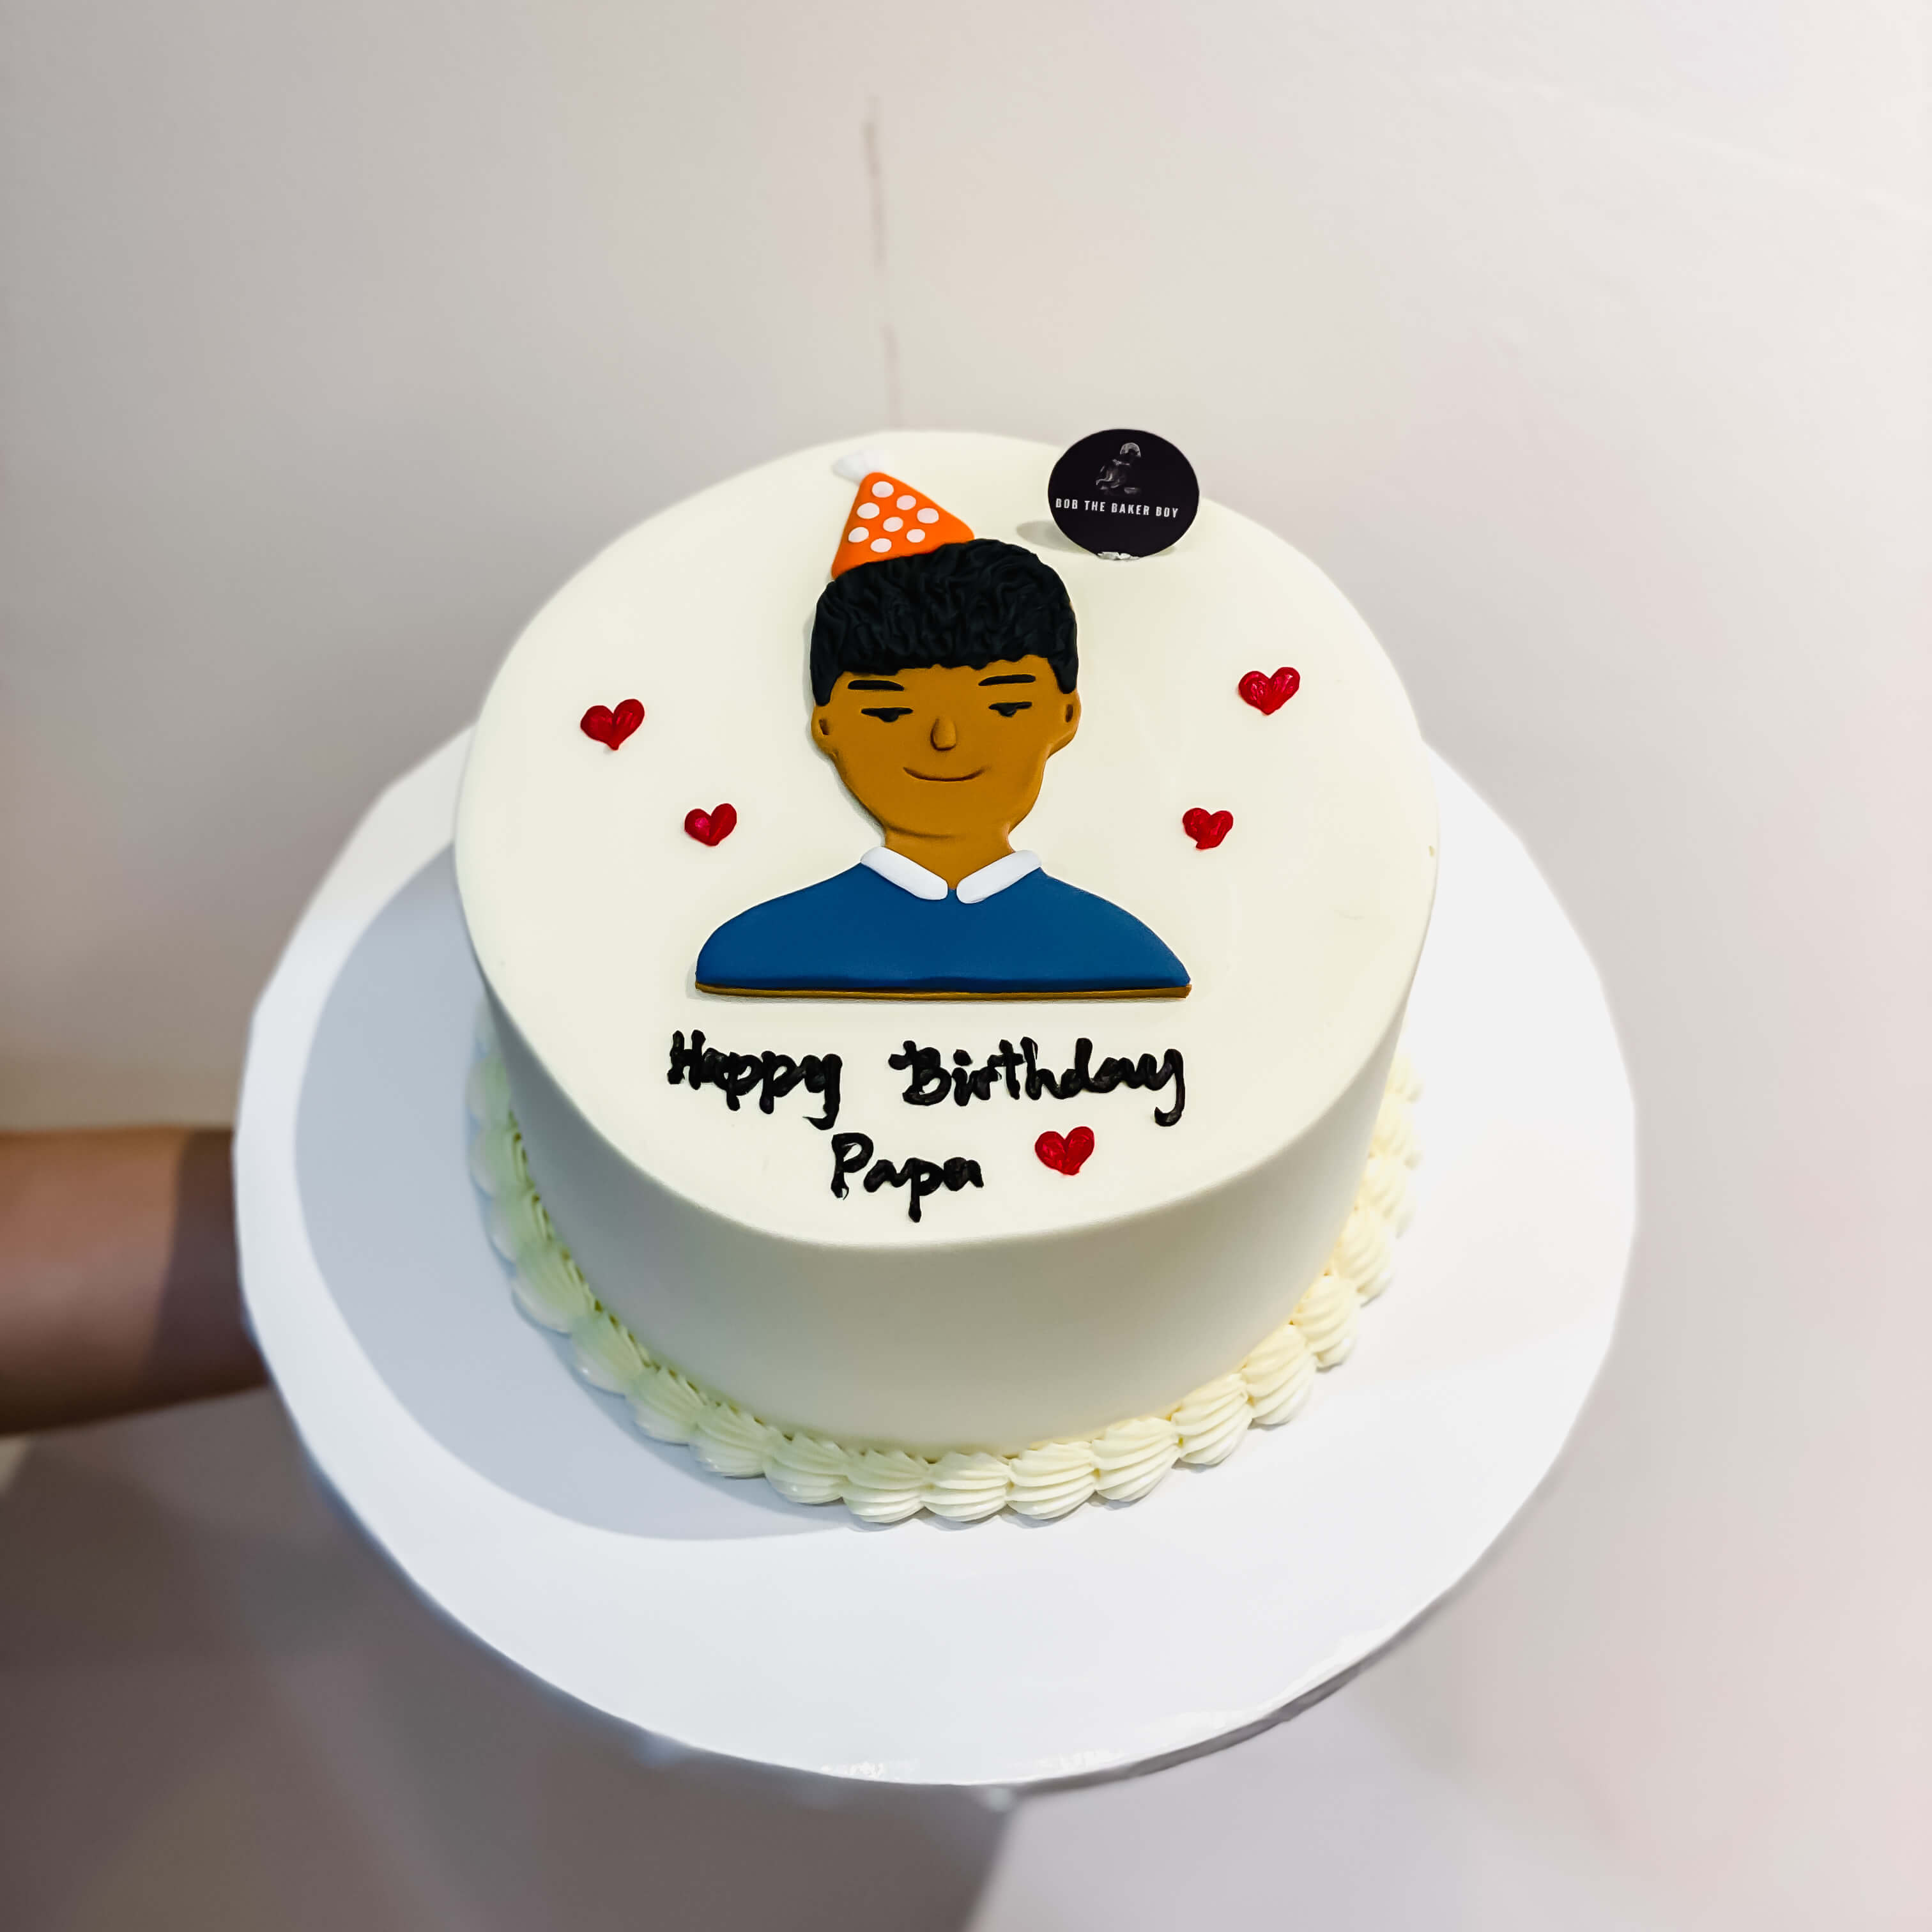 It's Art! Korean Popular Cakes And Desserts - Best 5